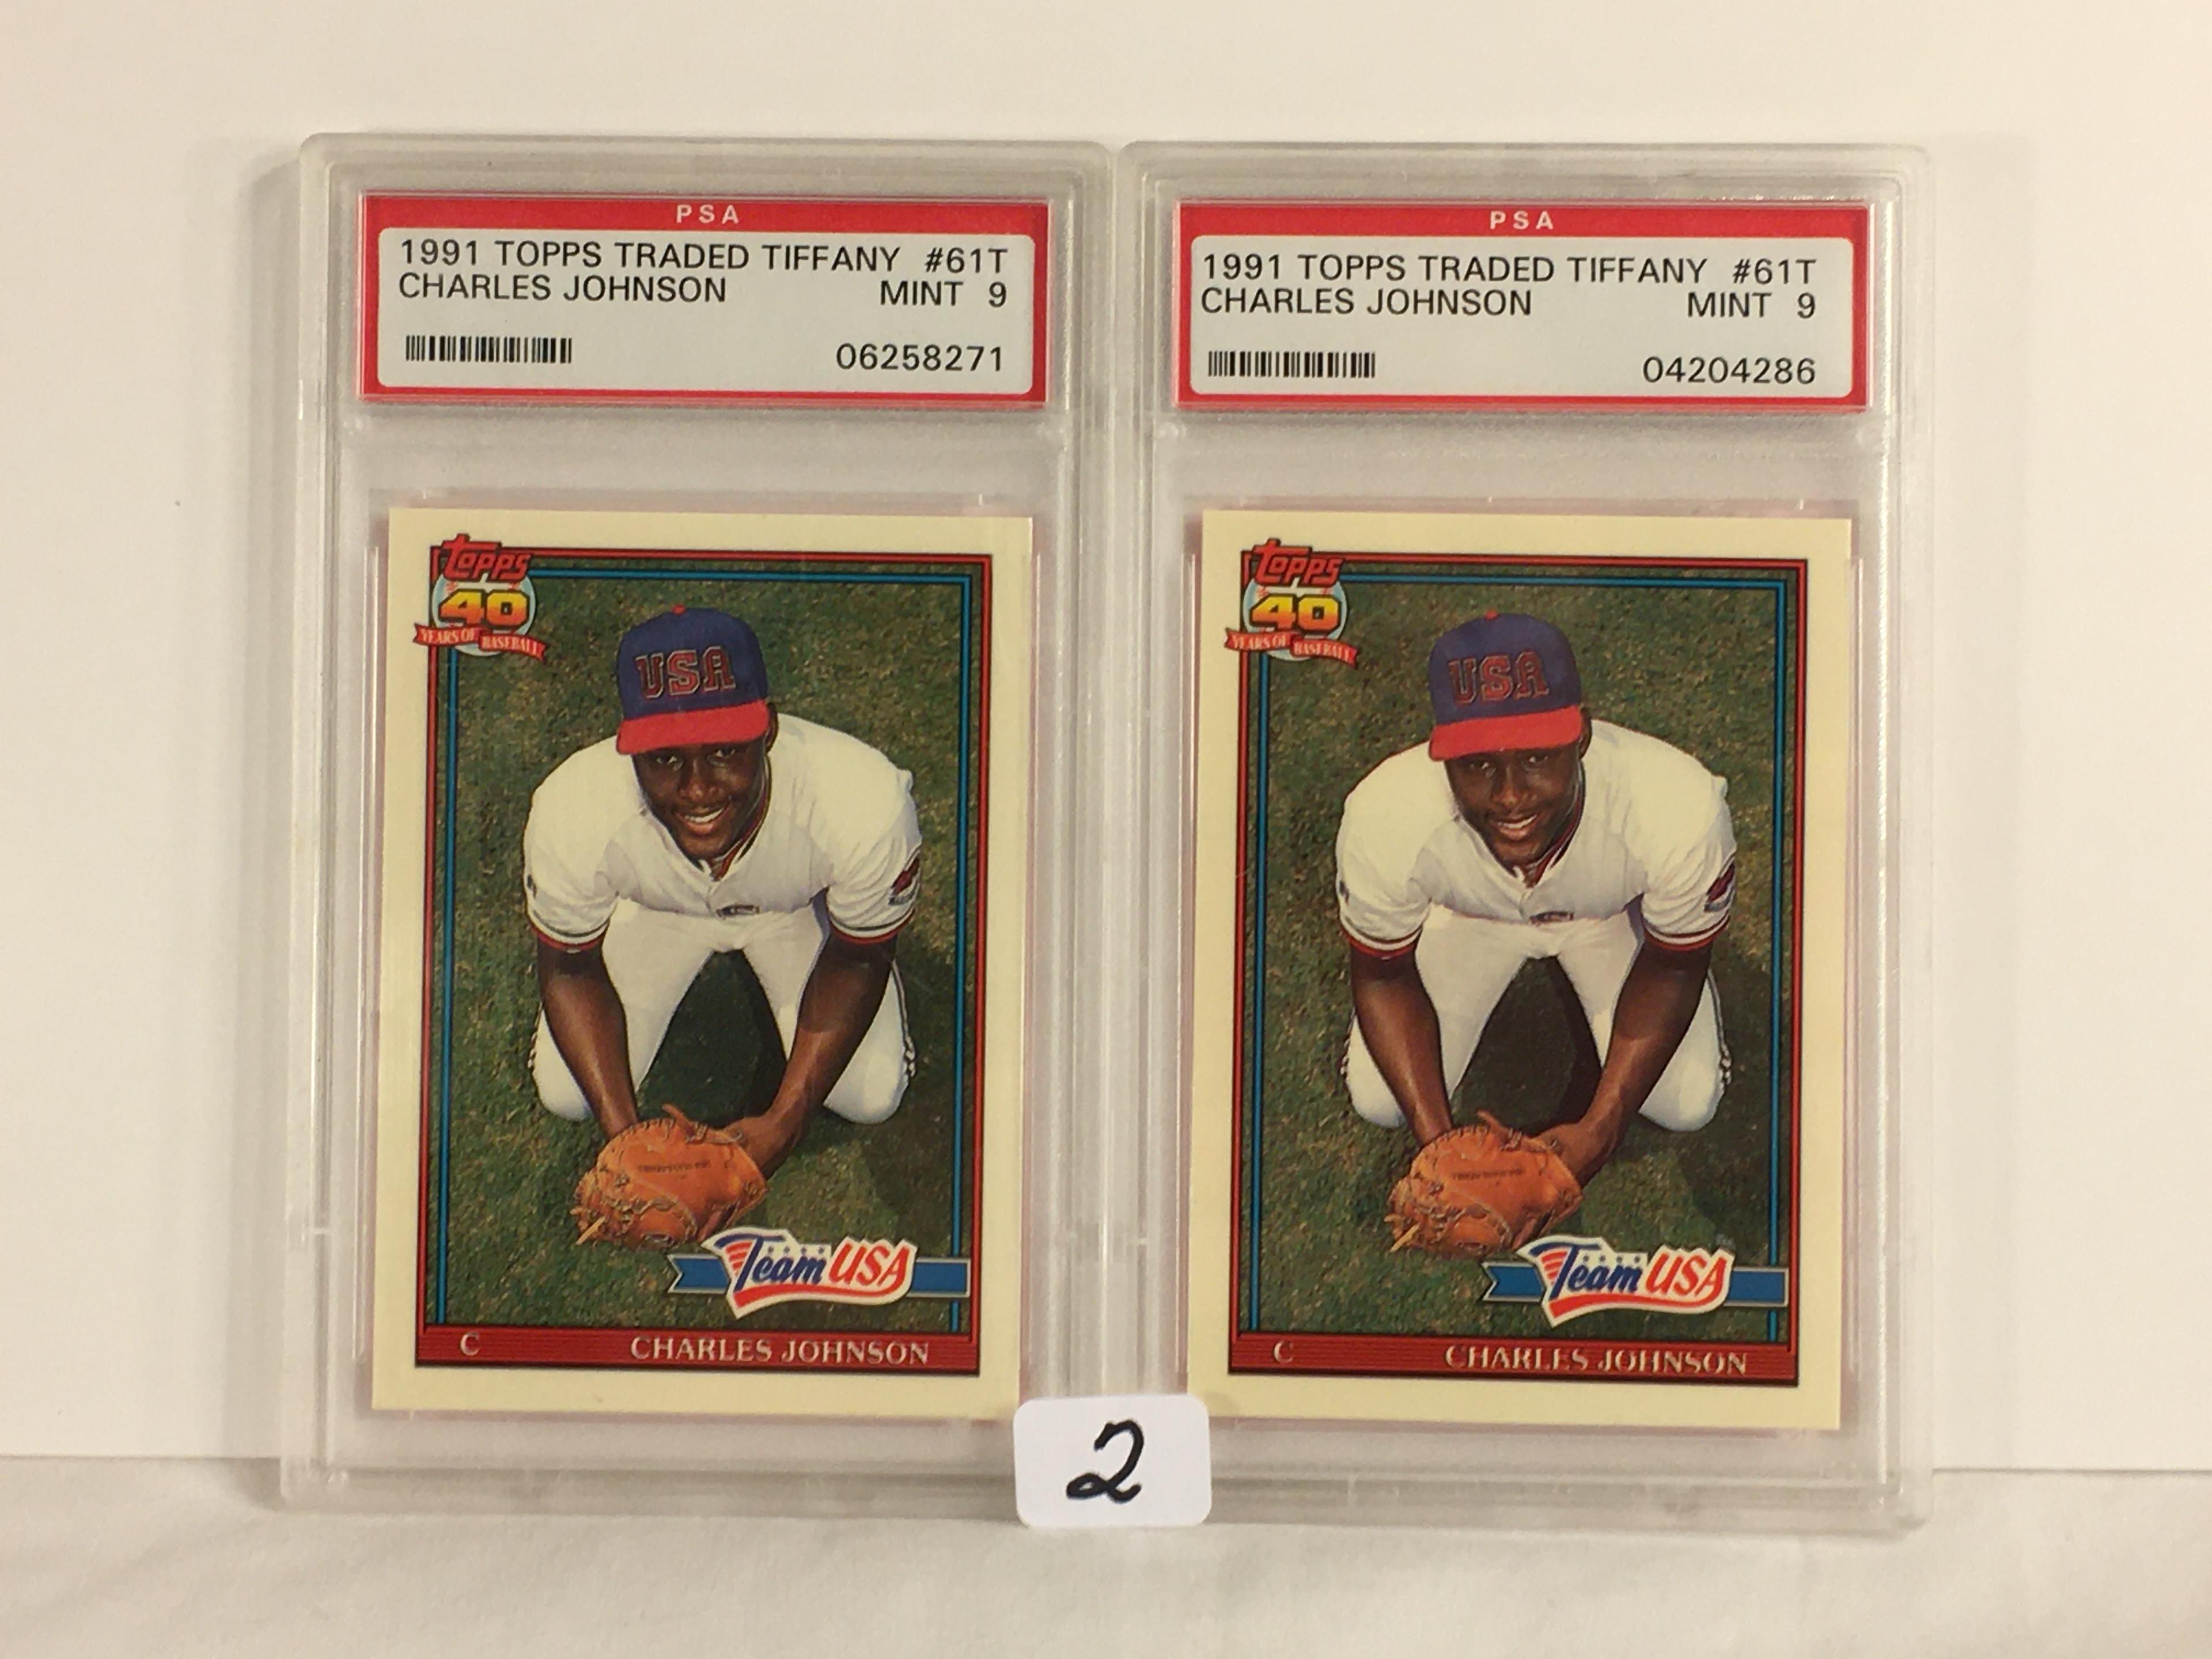 Lot of 2 Pieces PSA Graded 1991 Topps Traded Tiffany #61T Charles Johnson Mint 9 Baseball Cards